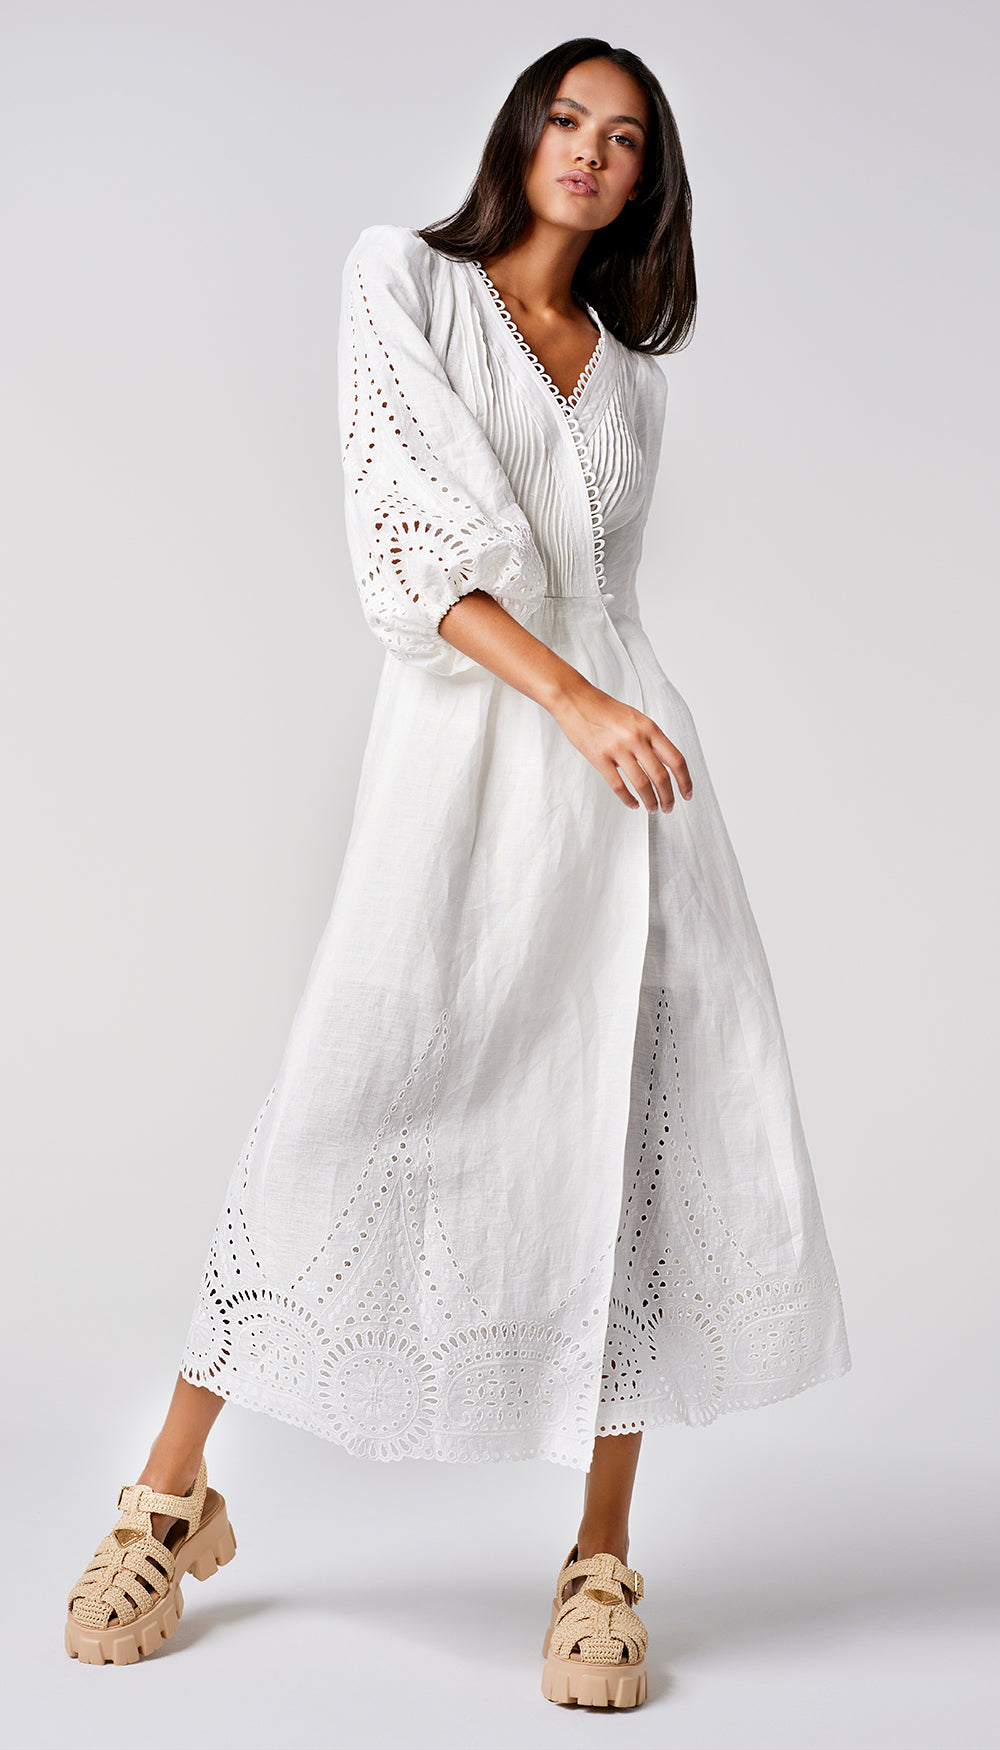 A woman in a white dress.